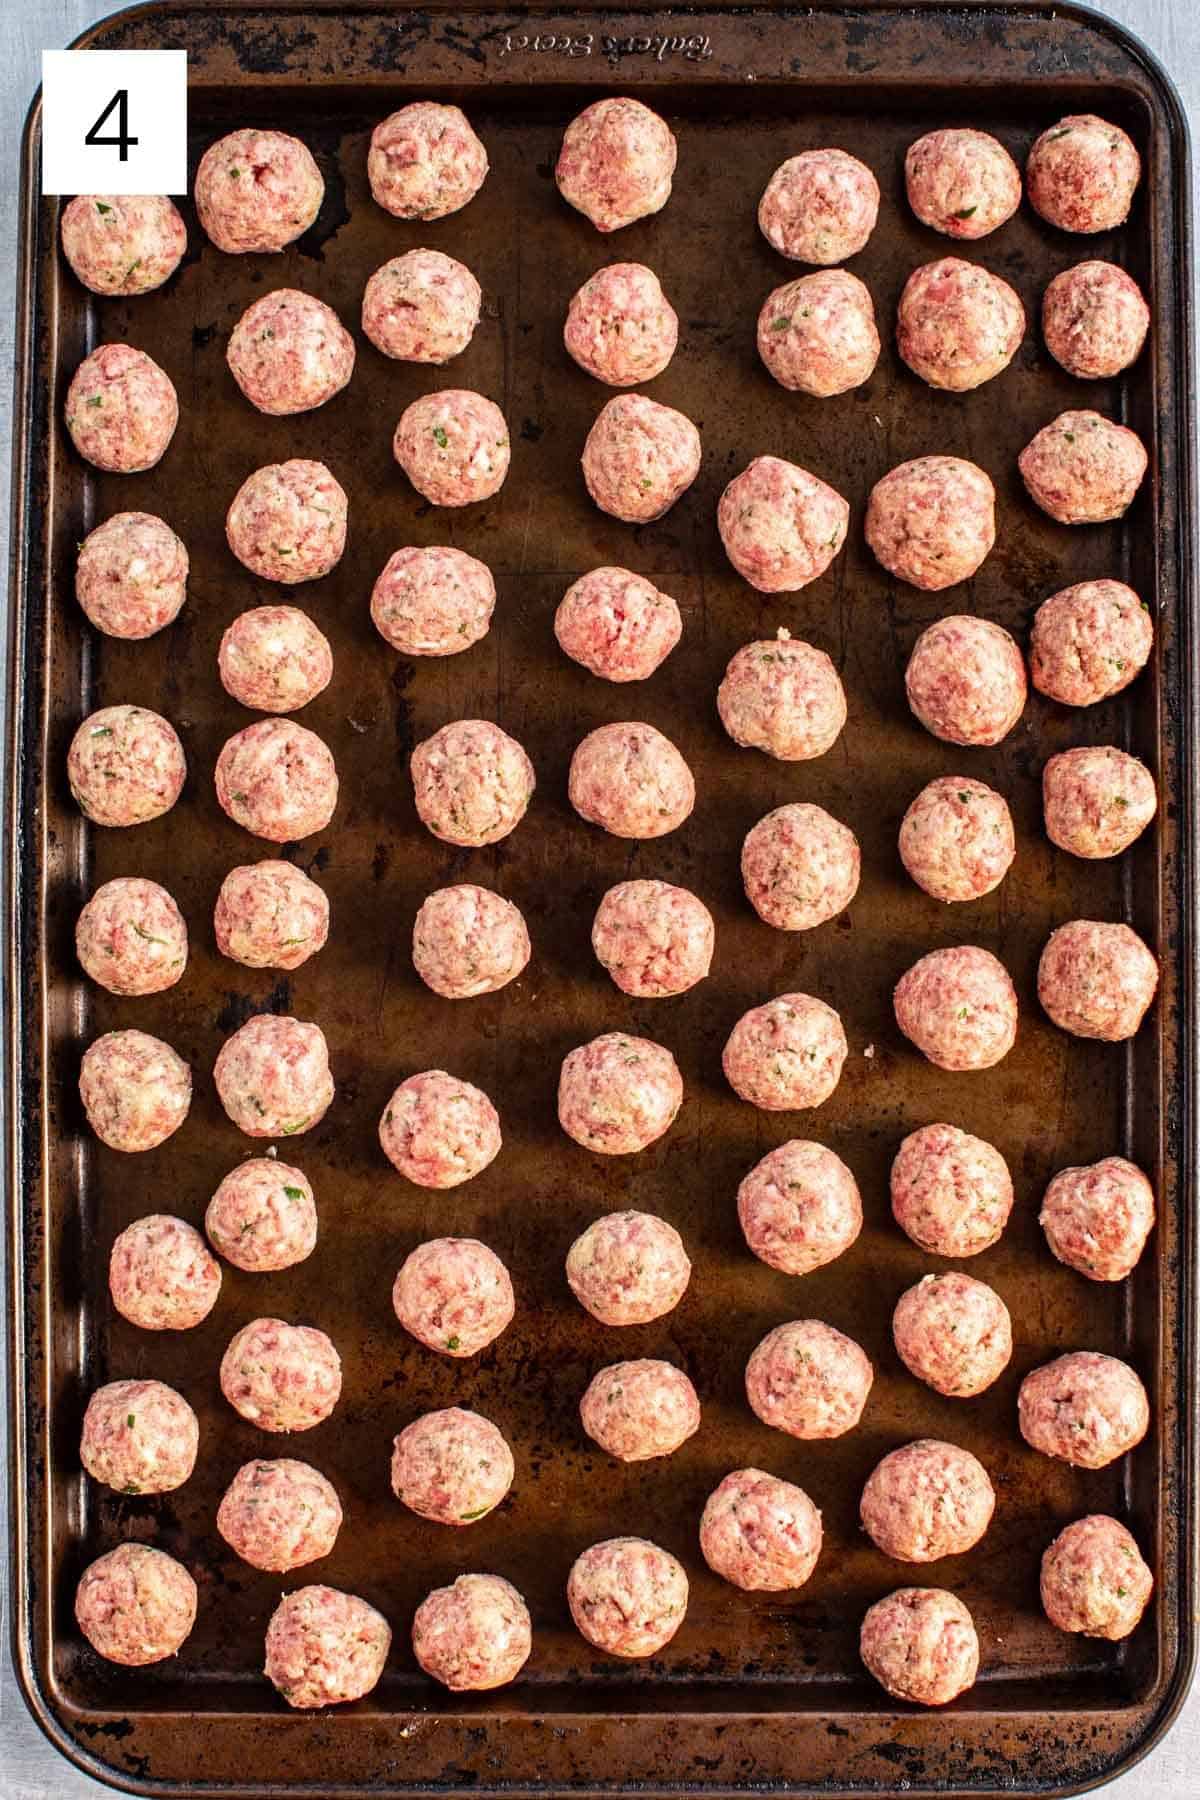 Small Italian meatballs on a baking sheet.